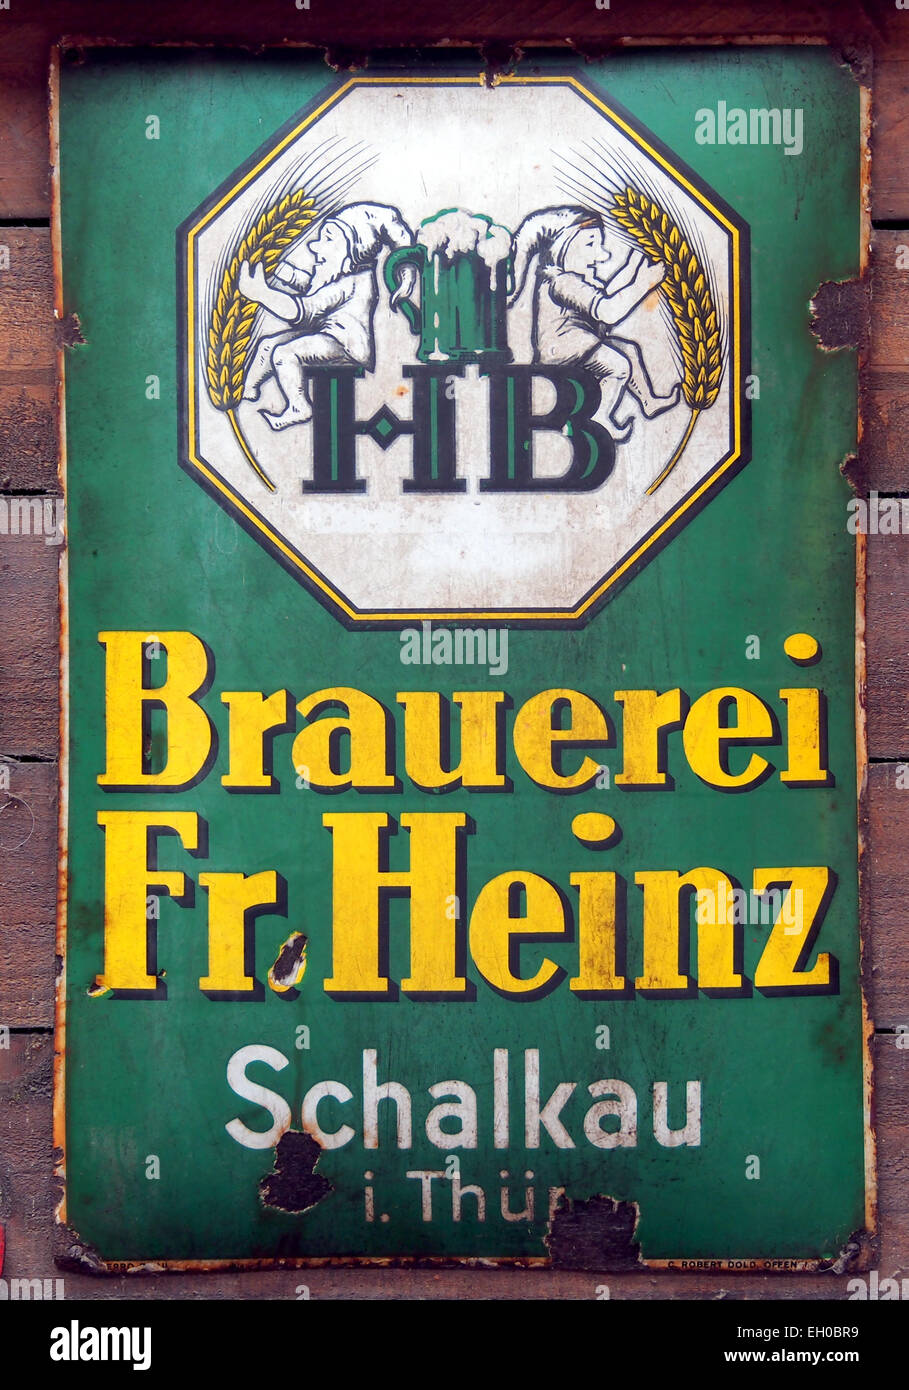 Brauerei Fr Heinz Schalkau enamel adverising sign Stock Photo